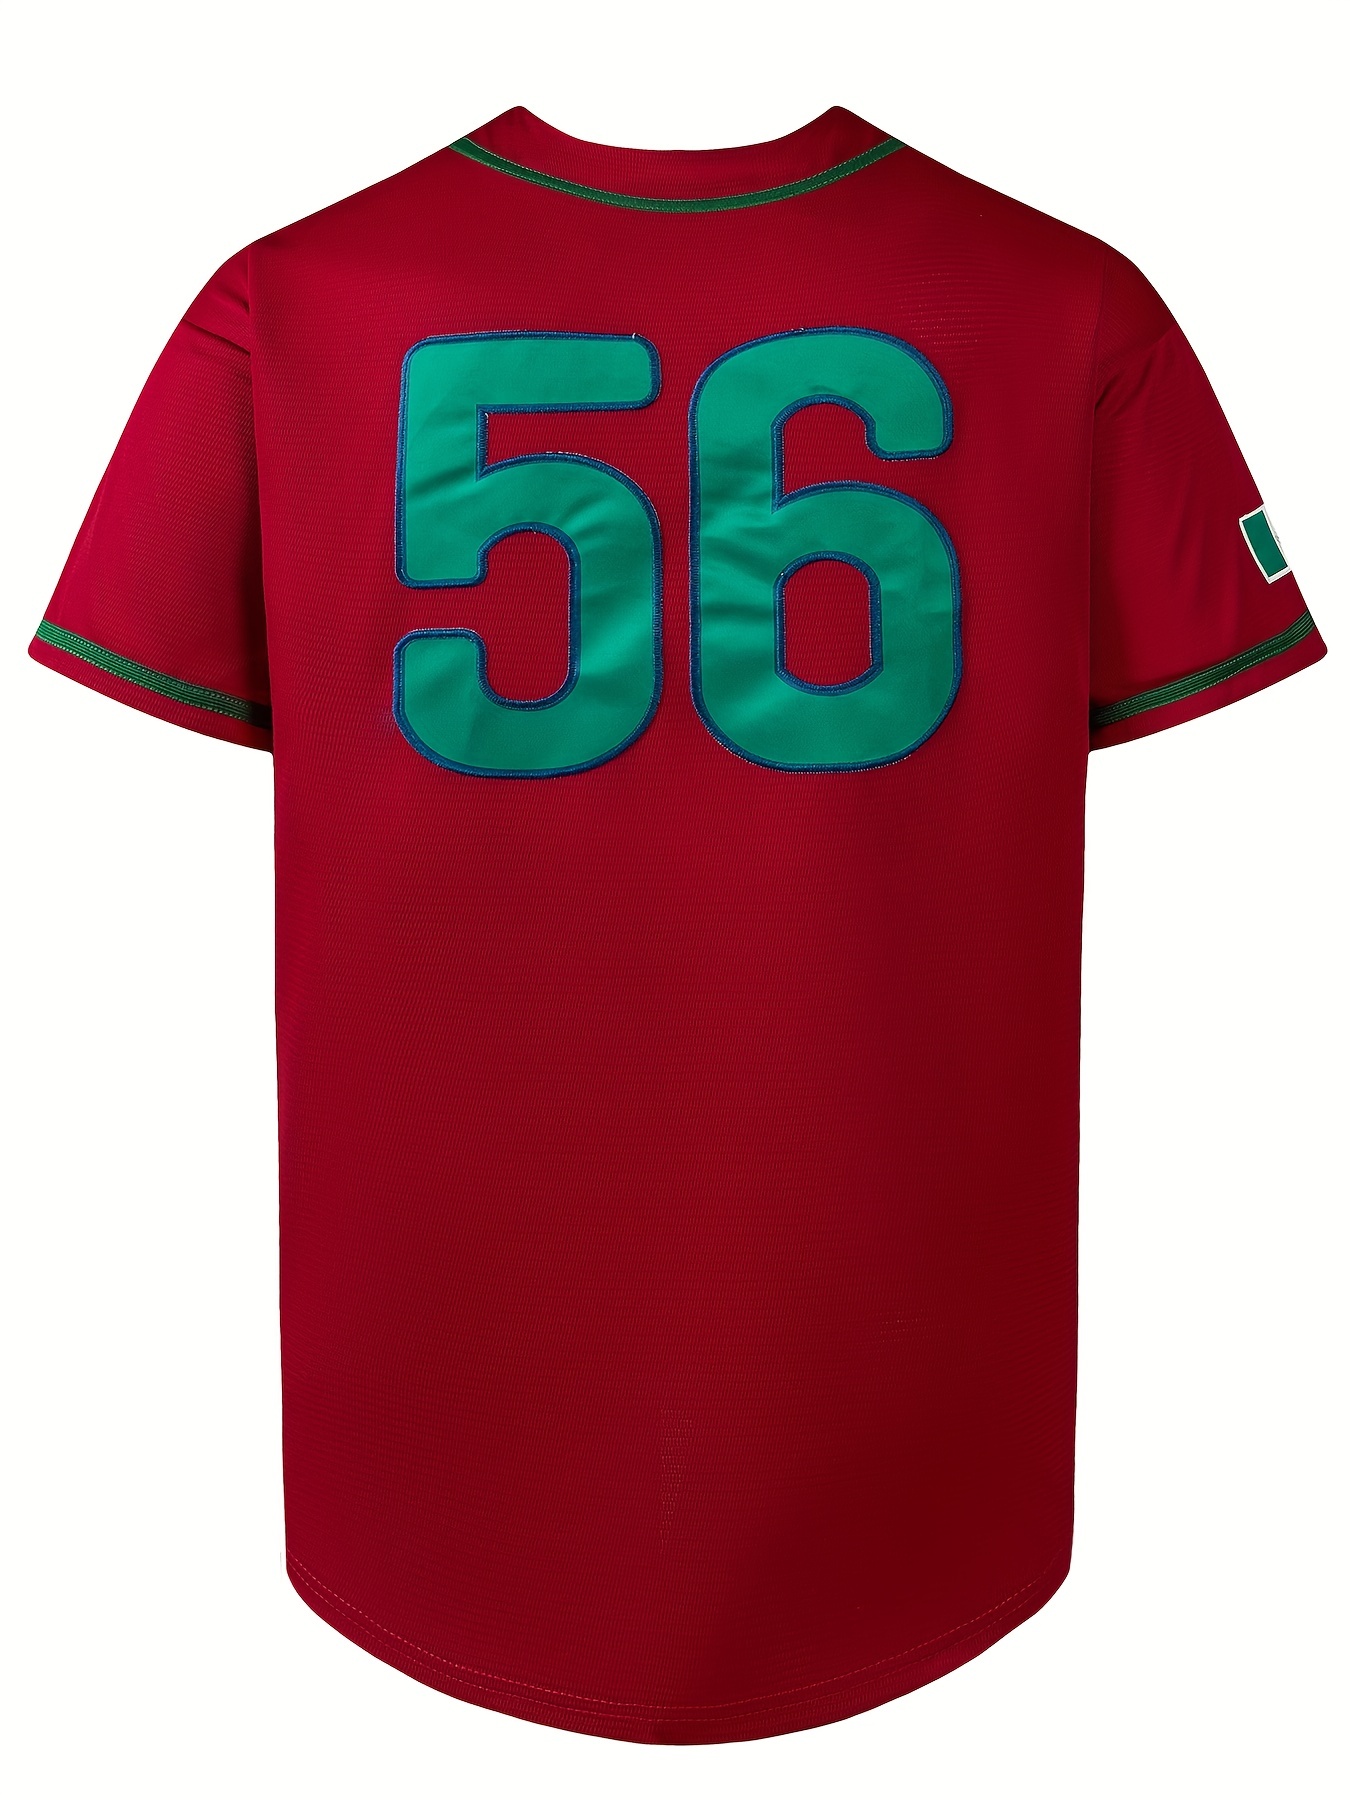 Mens Mexico 56 Baseball Jersey Retro Classic Baseball Shirt